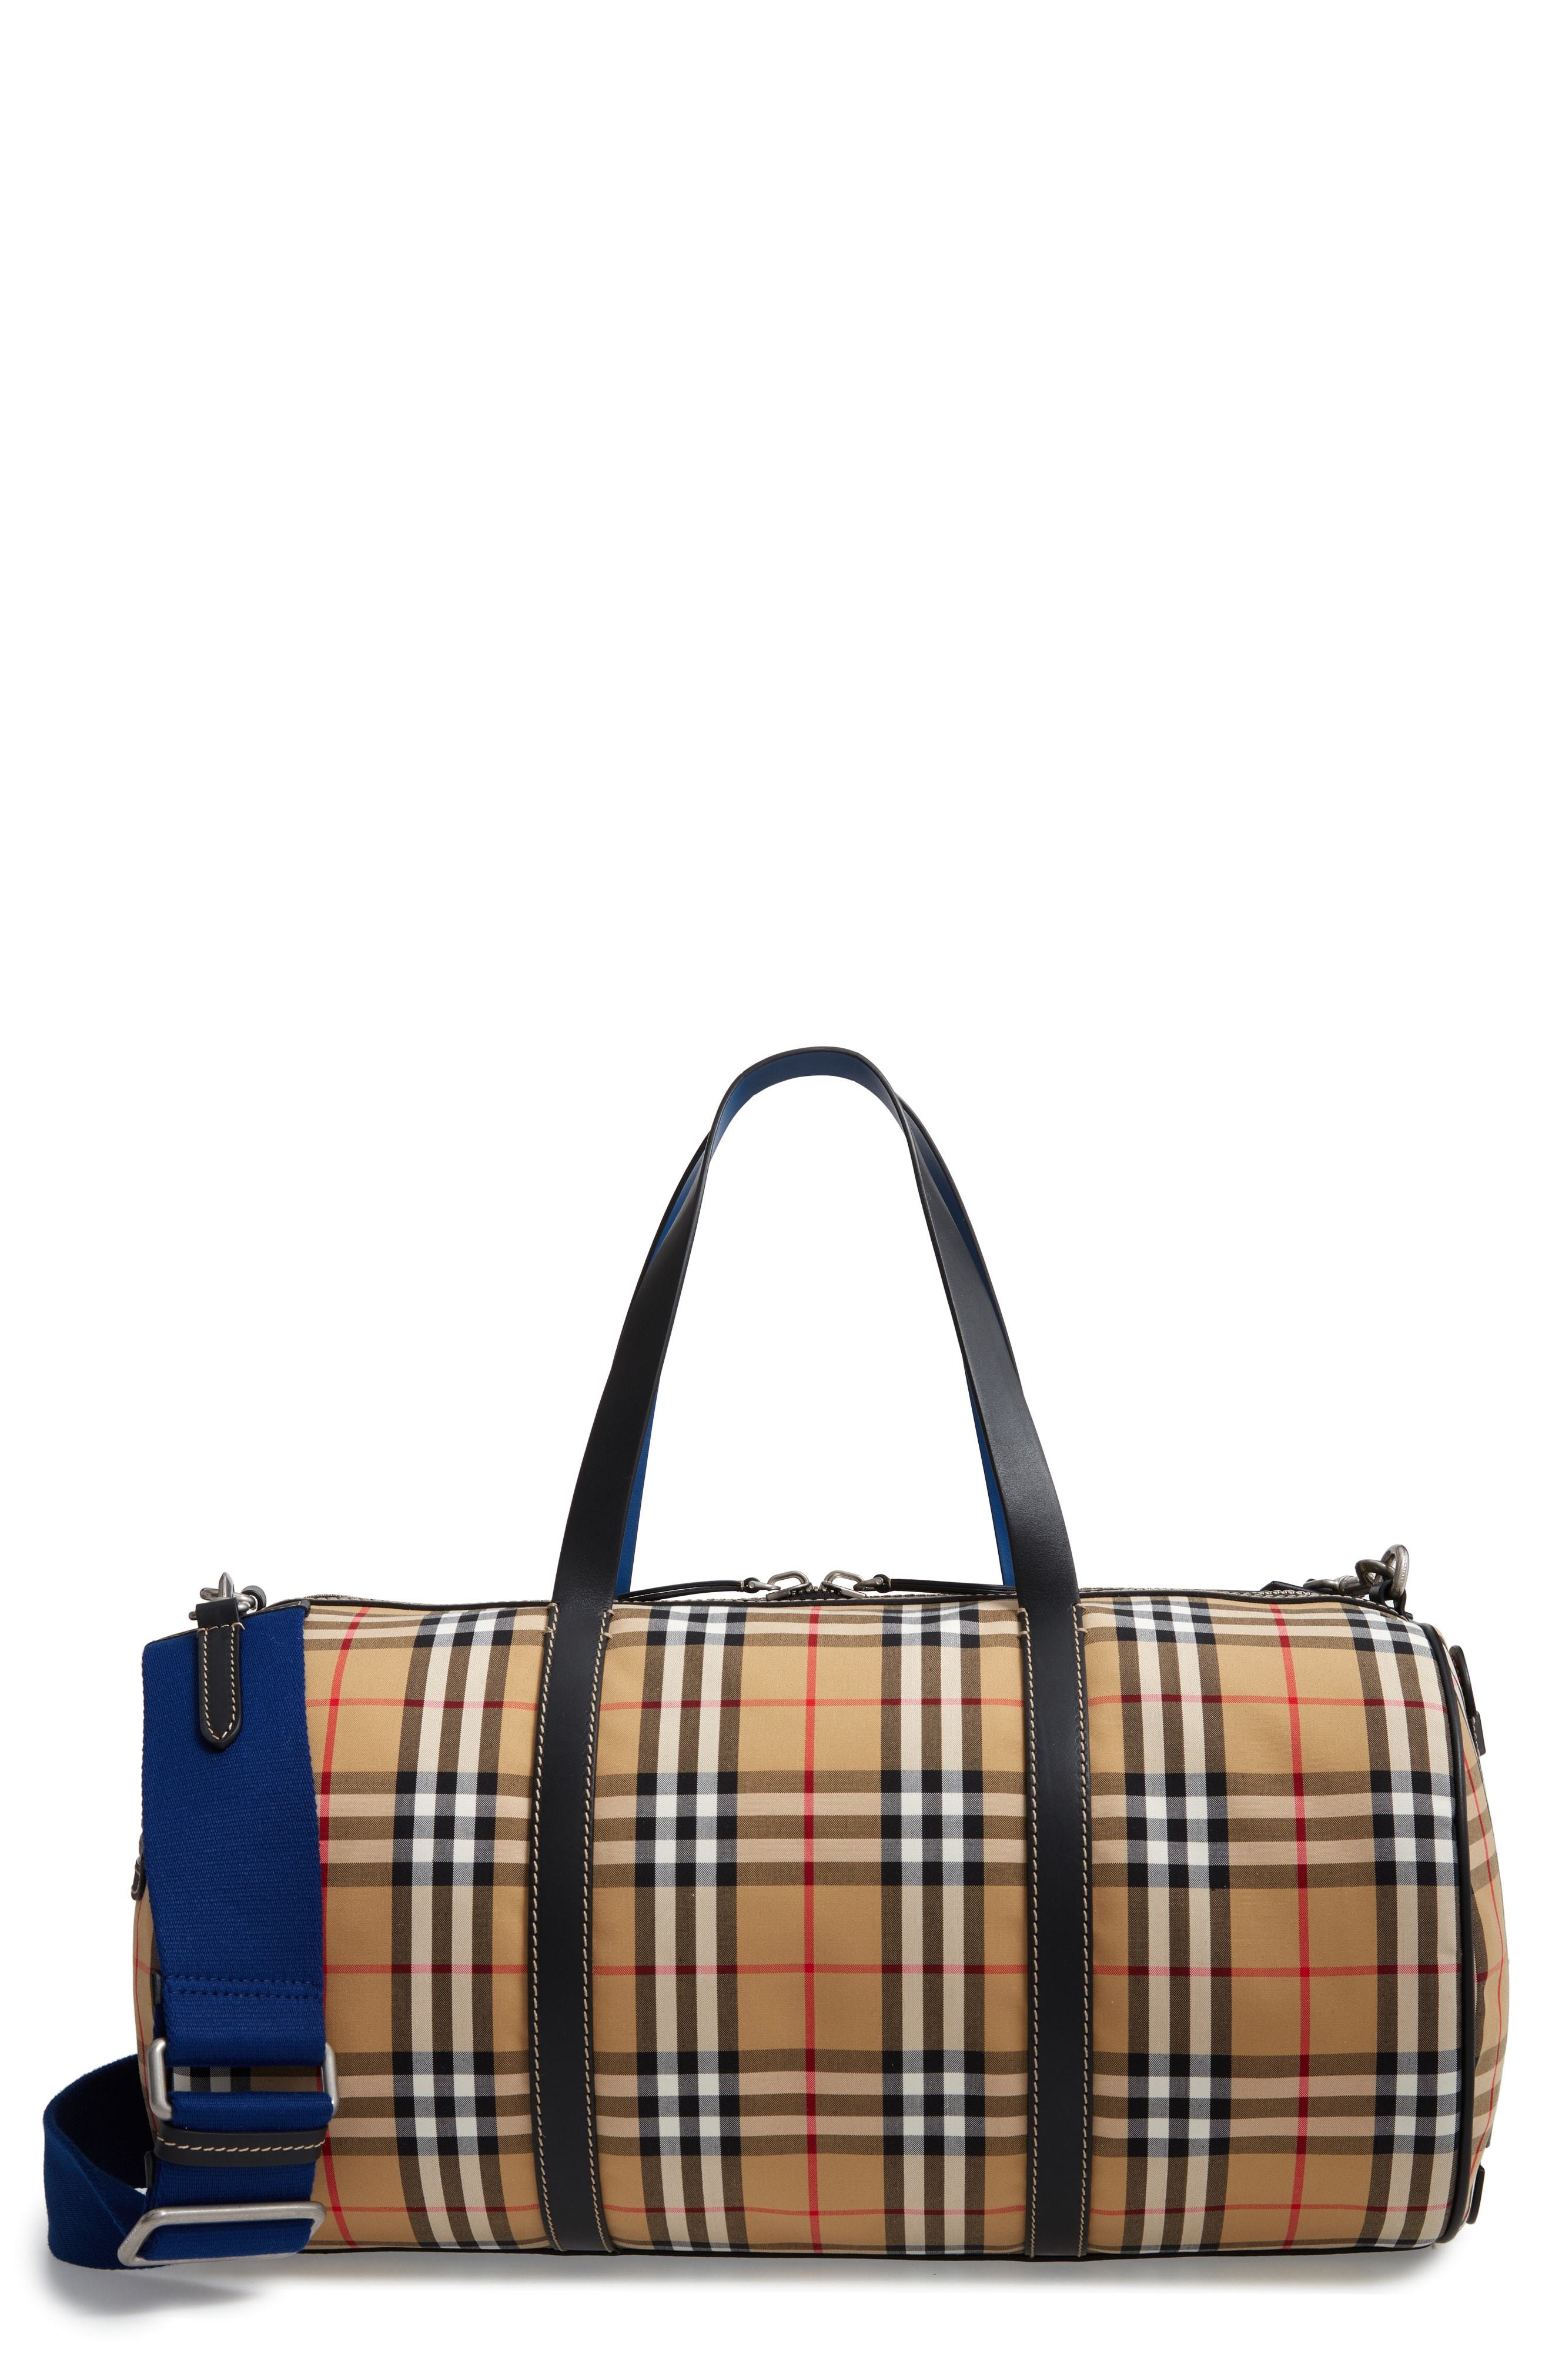 Burberry Medium Kennedy Vintage Check Duffel Bag, $1,450 | Nordstrom |  Lookastic